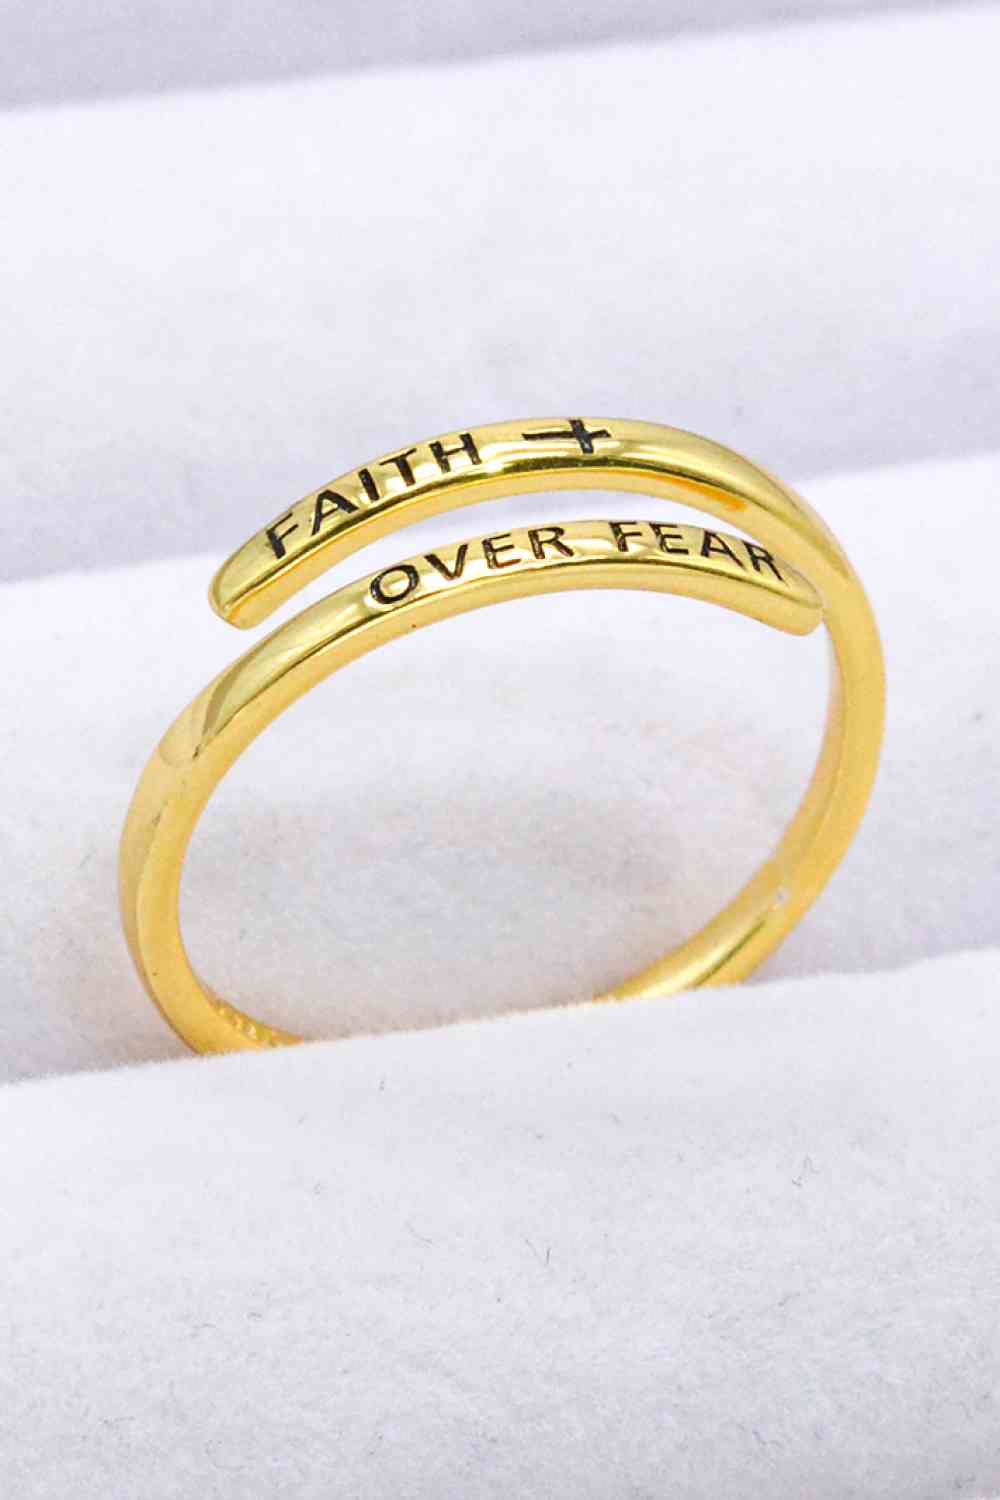 FAITH OVER FEAR Bypass Ring - Everyday-Sales.com